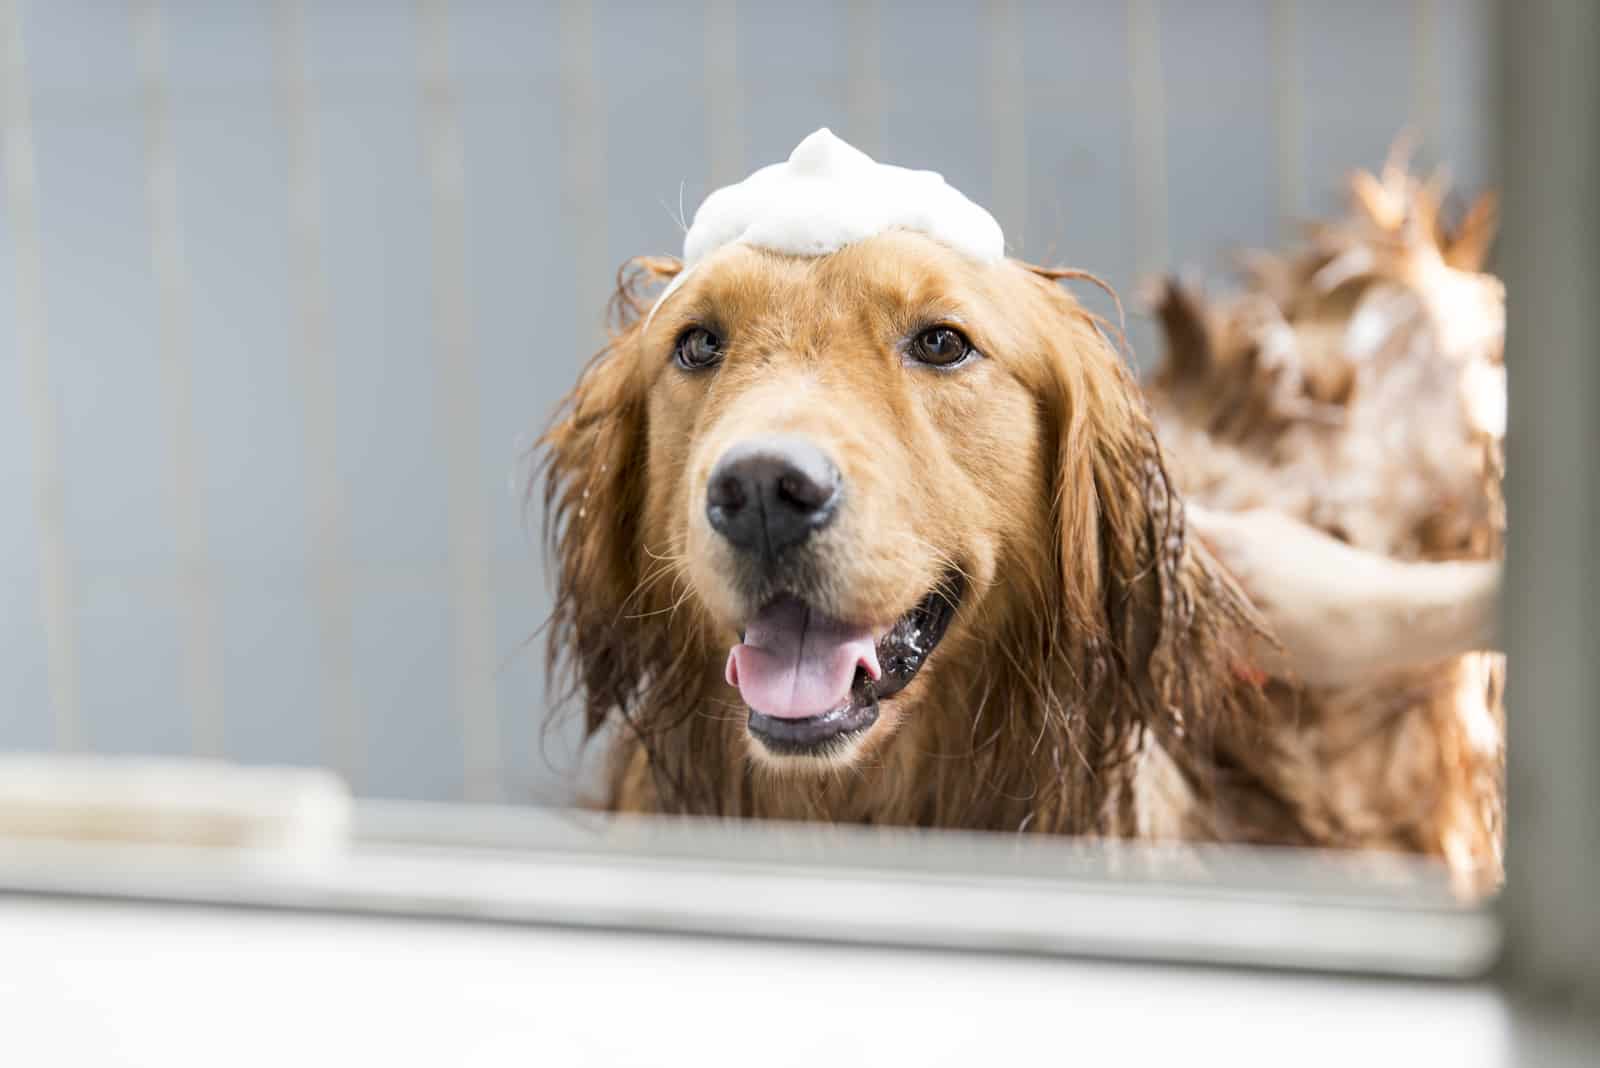 a smiling dog bathes